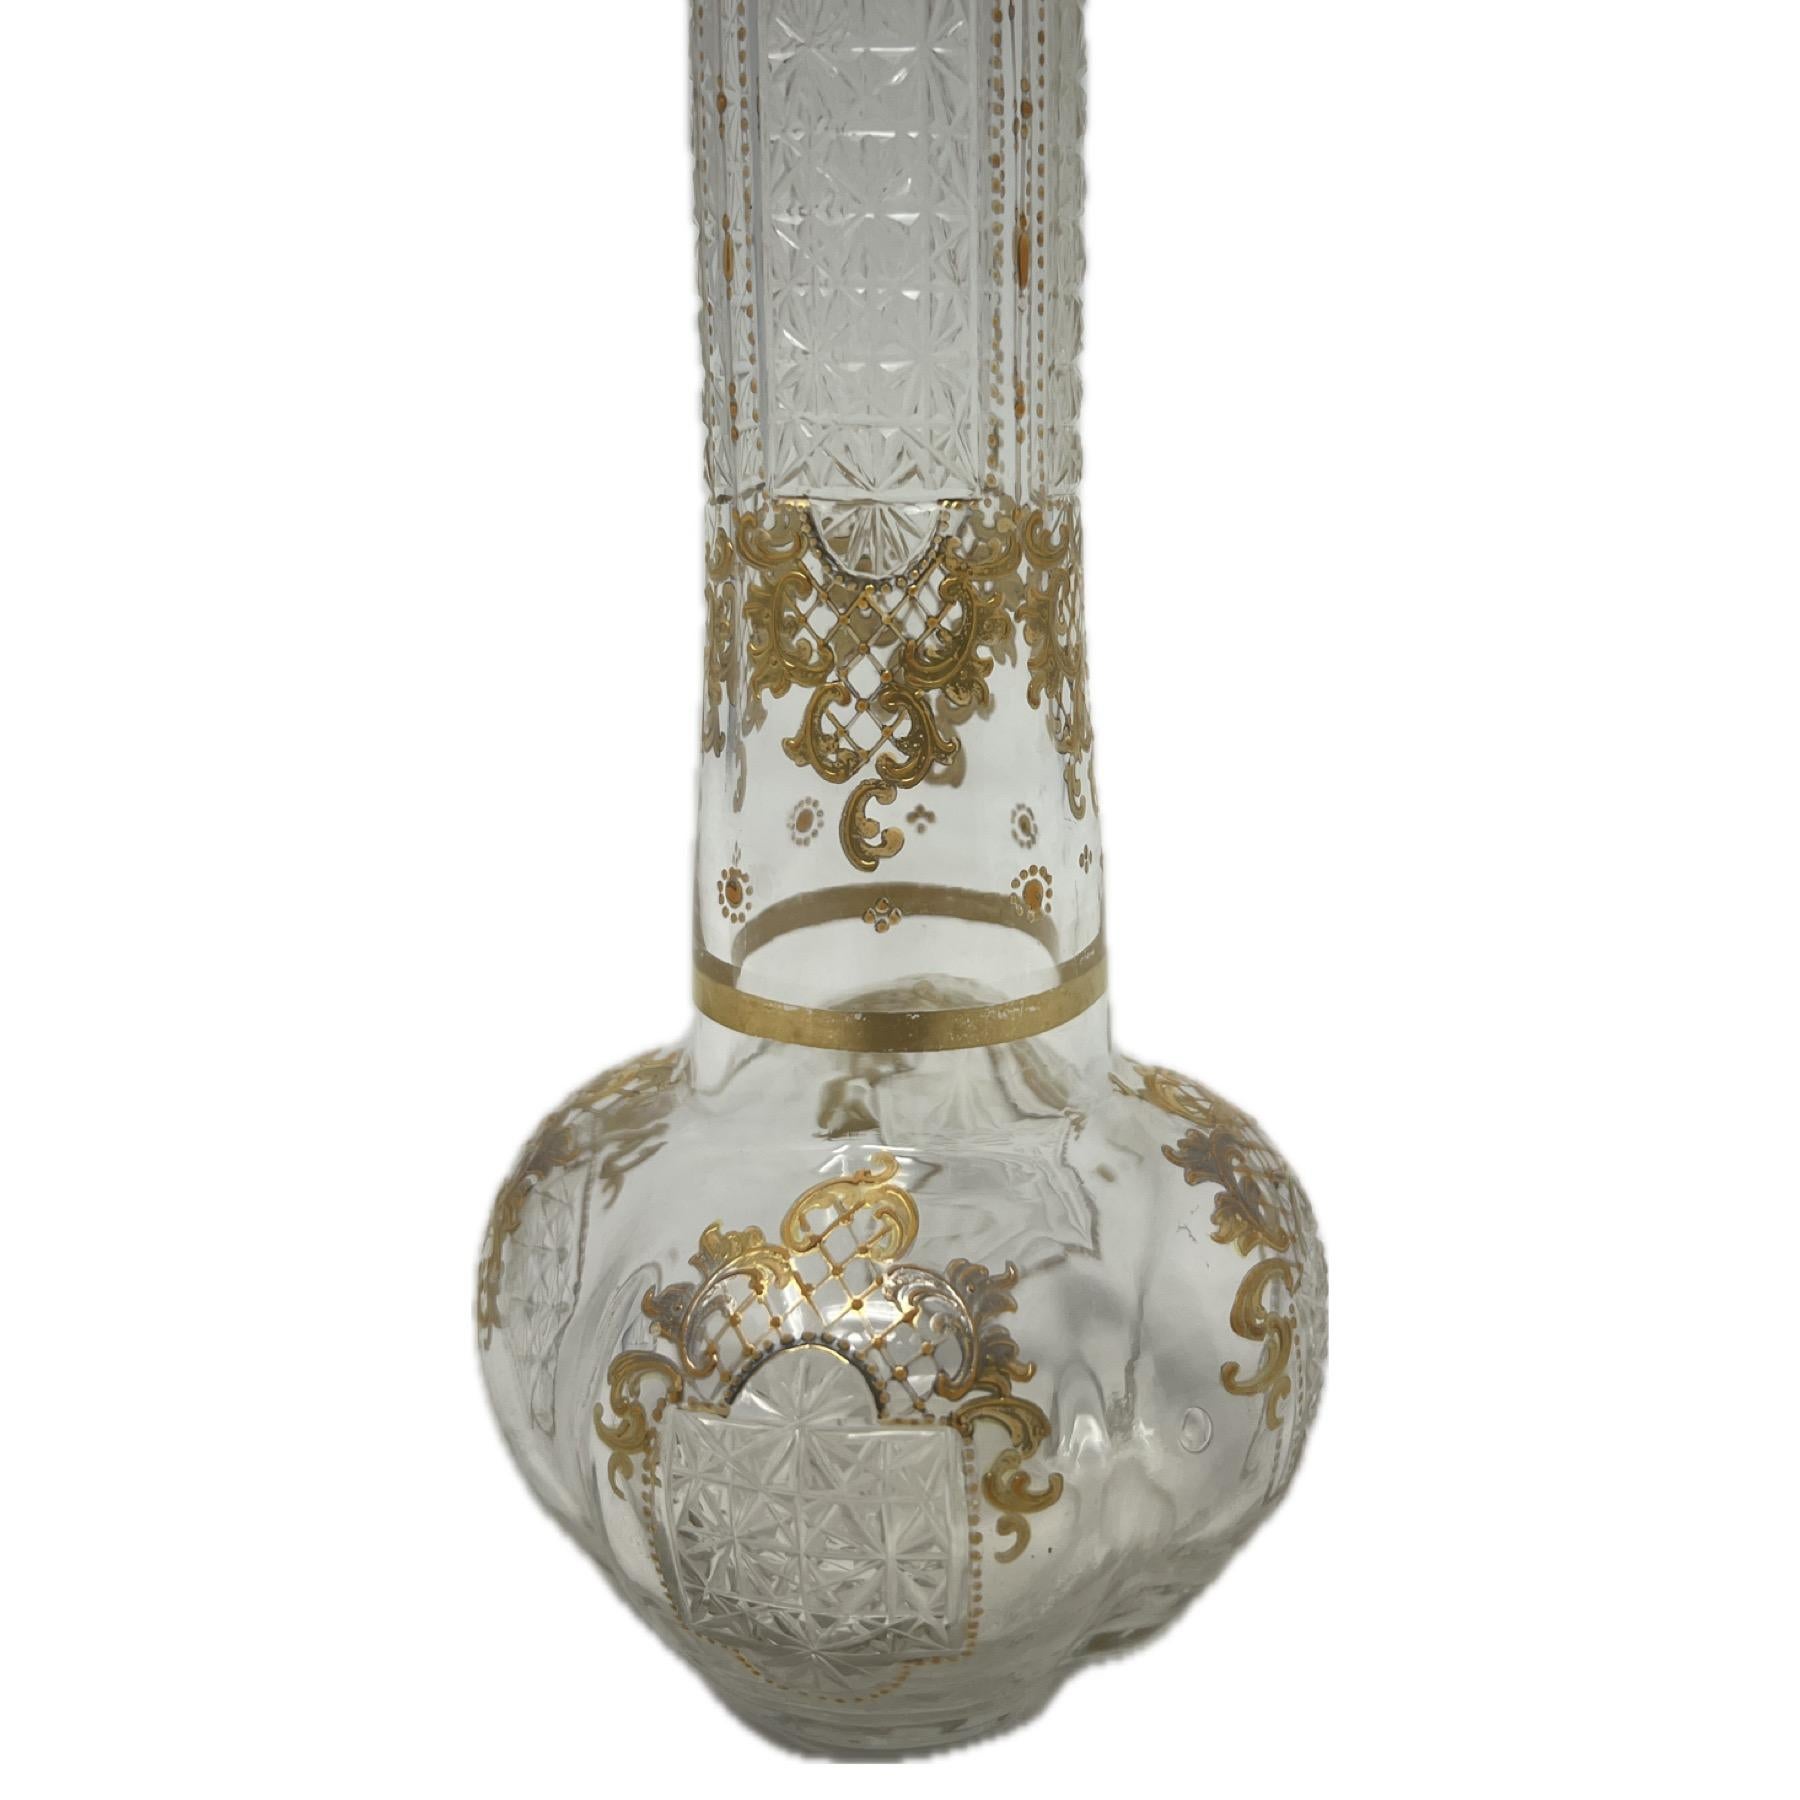 Antique German Moser Cut Glass Bud Vase with Gold Leaf Details, Circa 1880's. For Sale 1